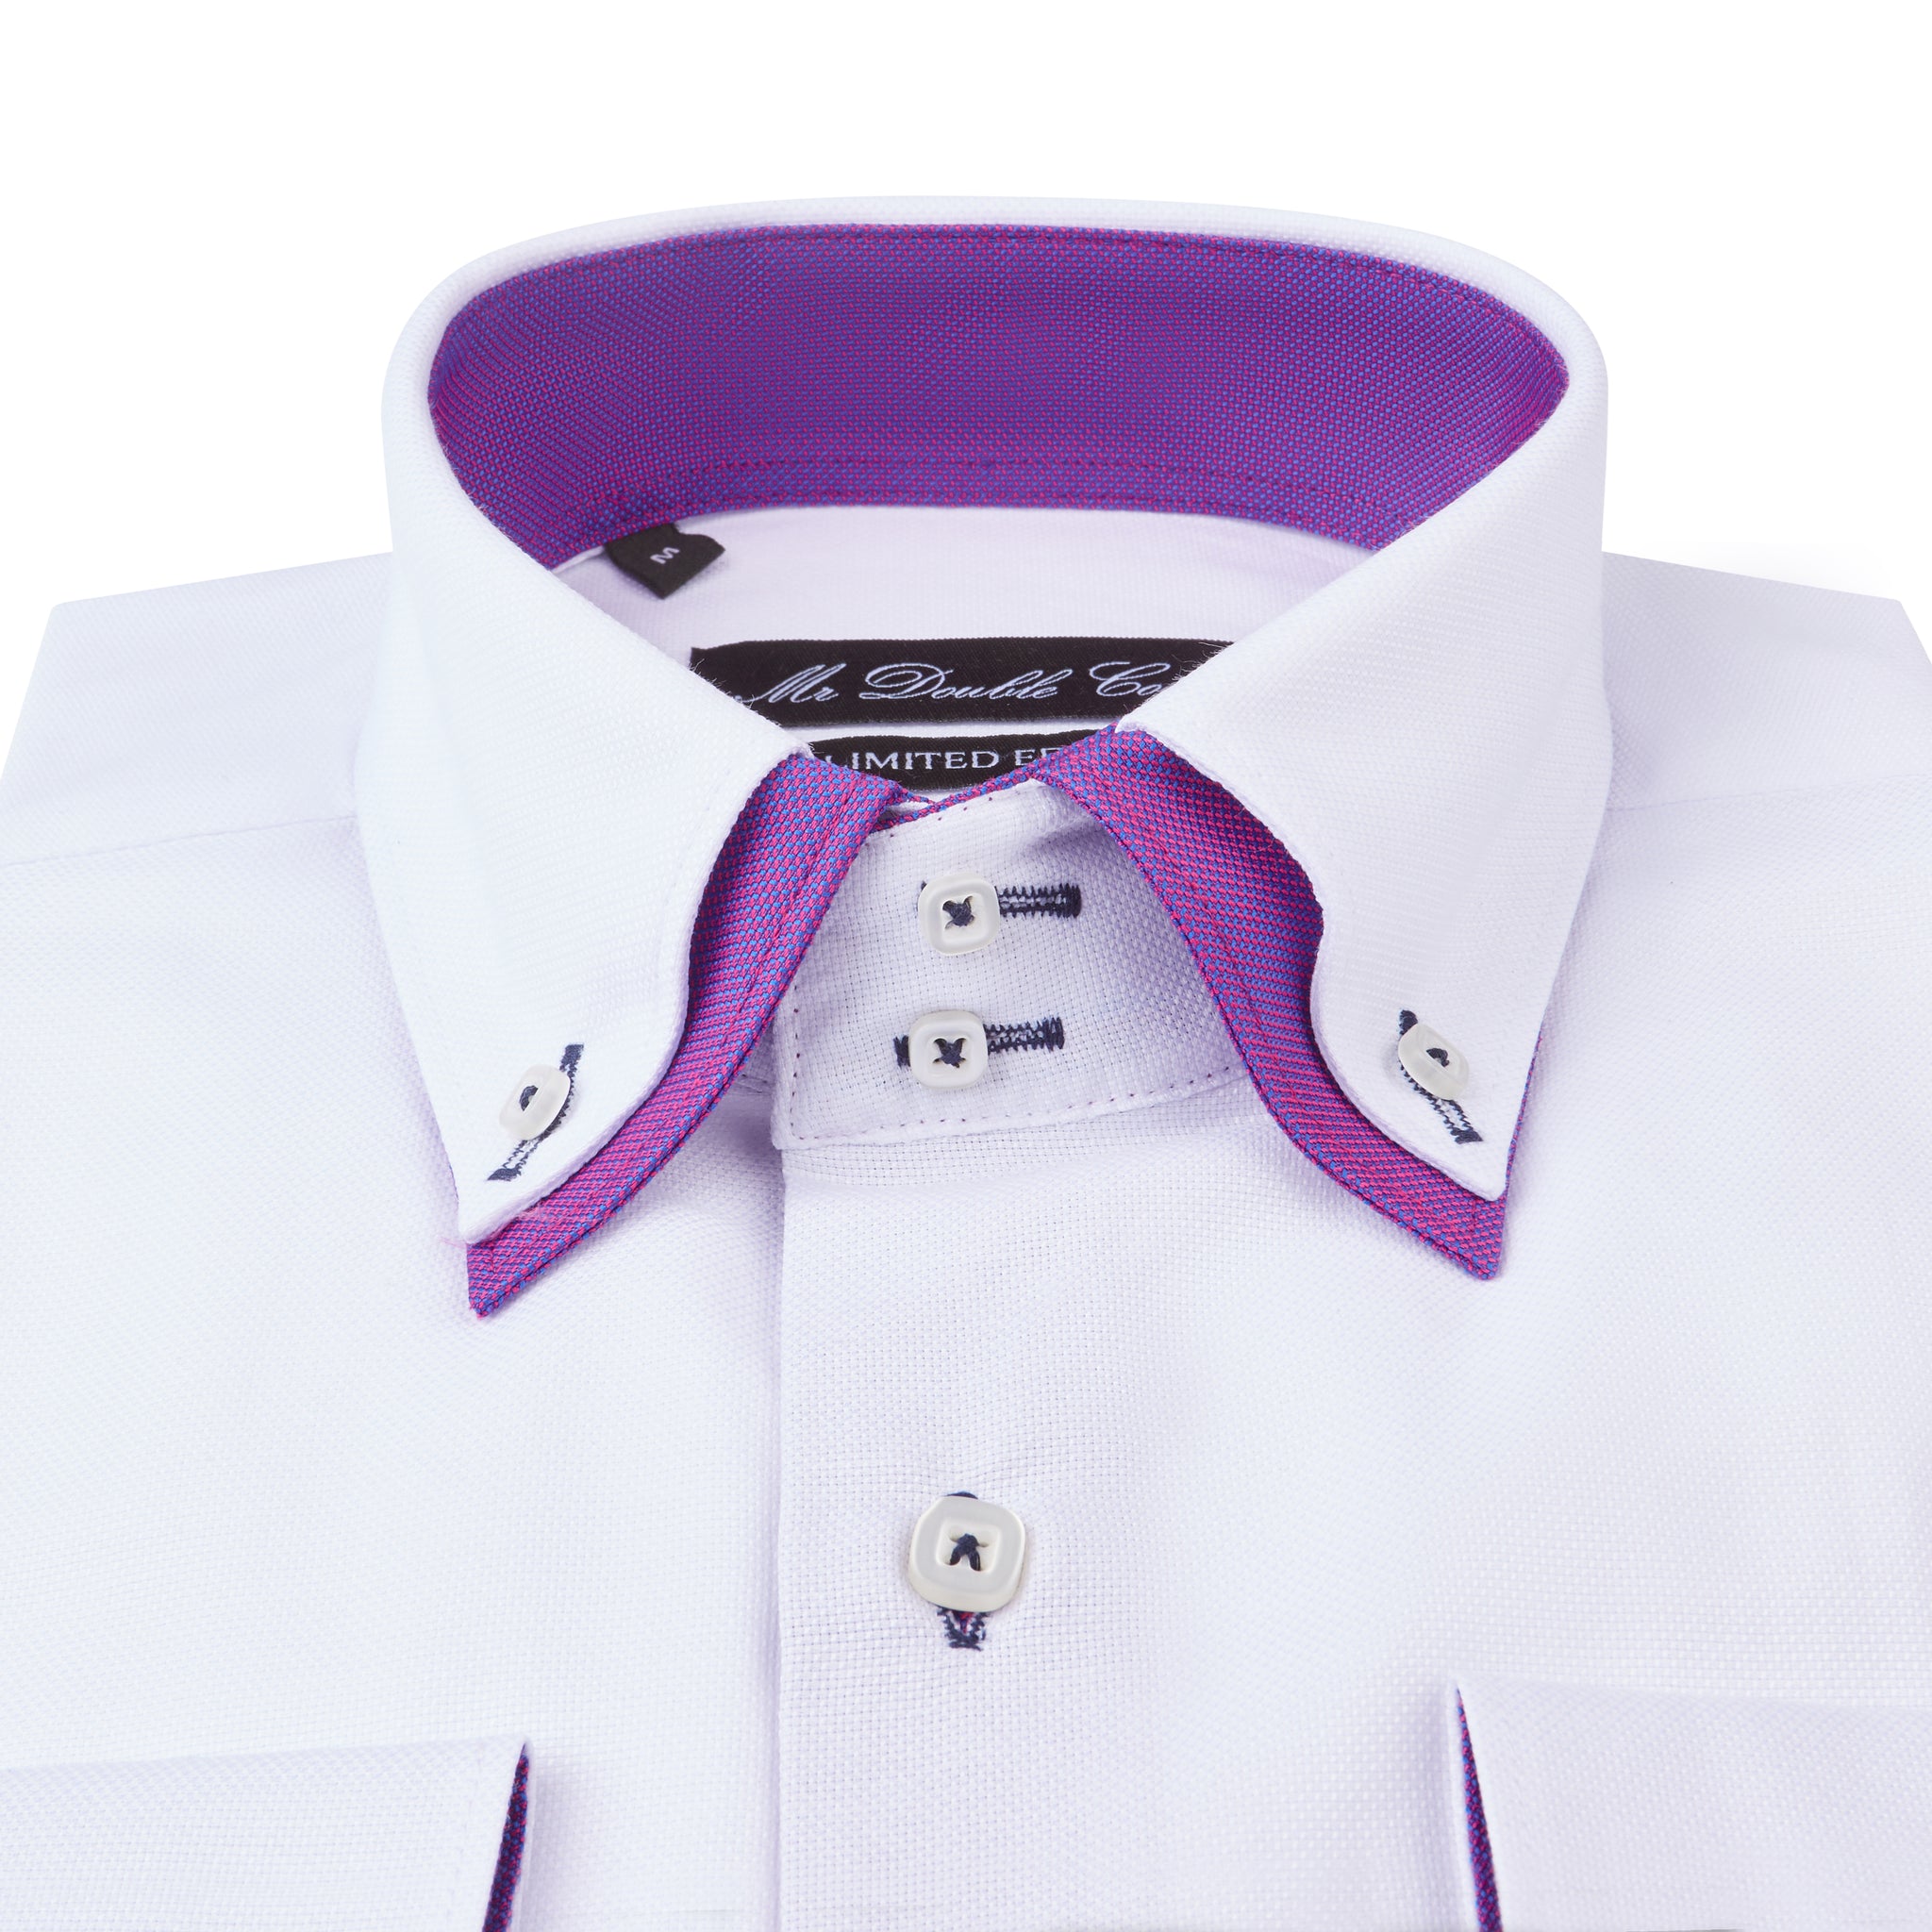 CBGELRT Mens Shirts Casual Purple Dress Shirt Men Summer Casual Embroidery  Edge Solid Shirt Short Sleeve Lapel Collar Shirts White xxl 